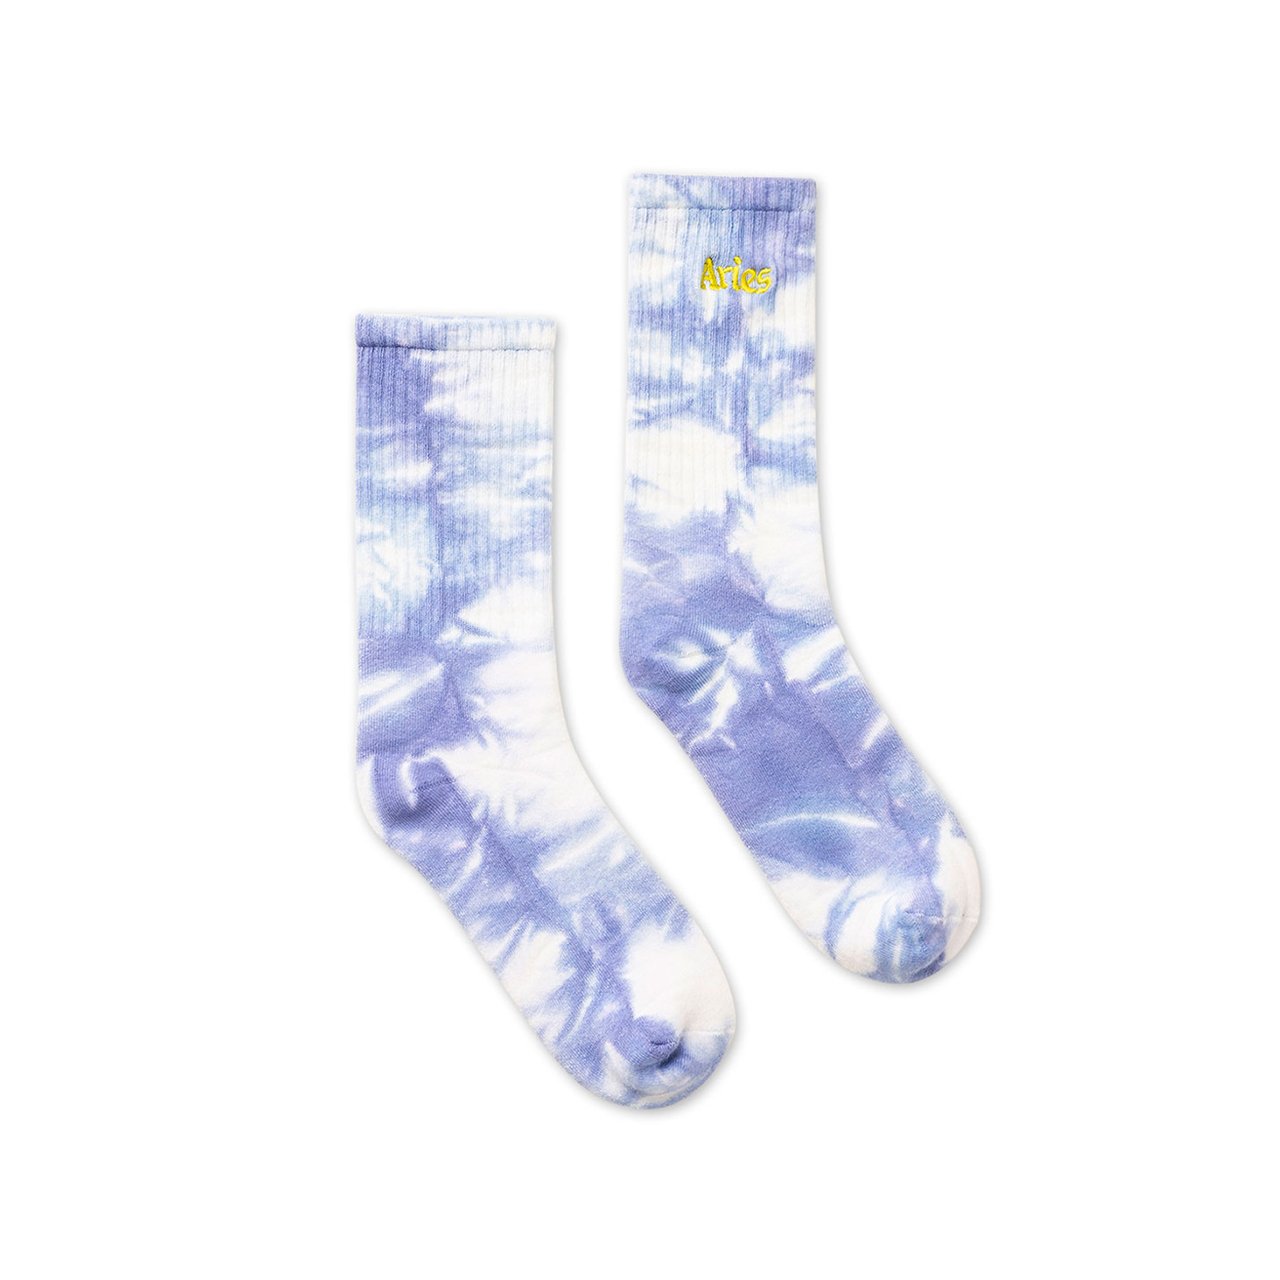 aries tie dye socks (purple / white) - sqar00044 - a.plus - Image - 1